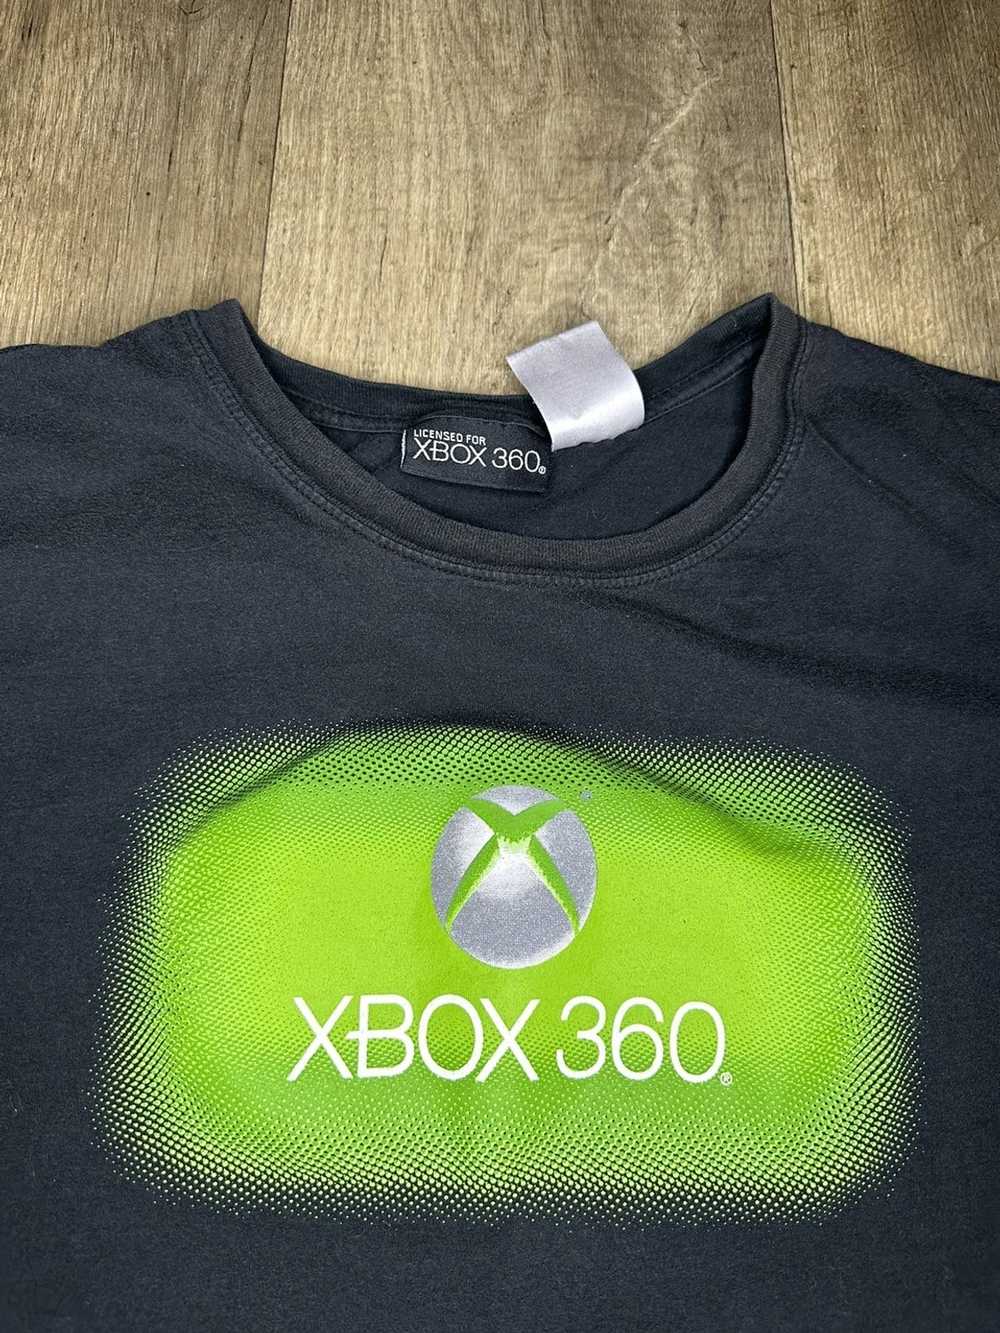 Xbox 360 09 Xbox 360 T Shirt - image 3